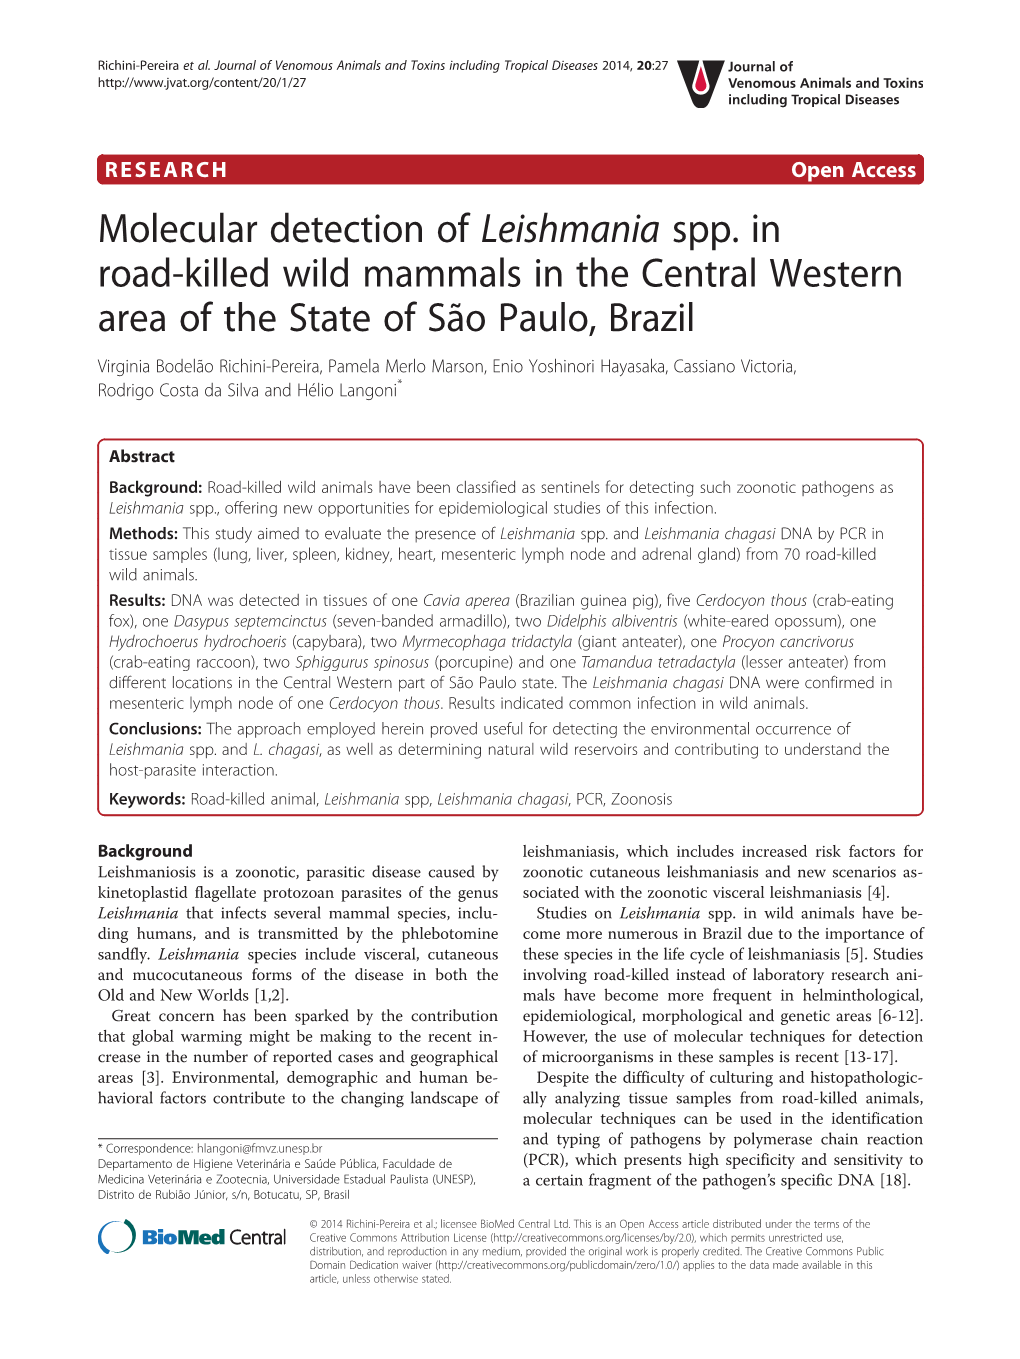 Molecular Detection of Leishmania Spp. in Road-Killed Wild Mammals In